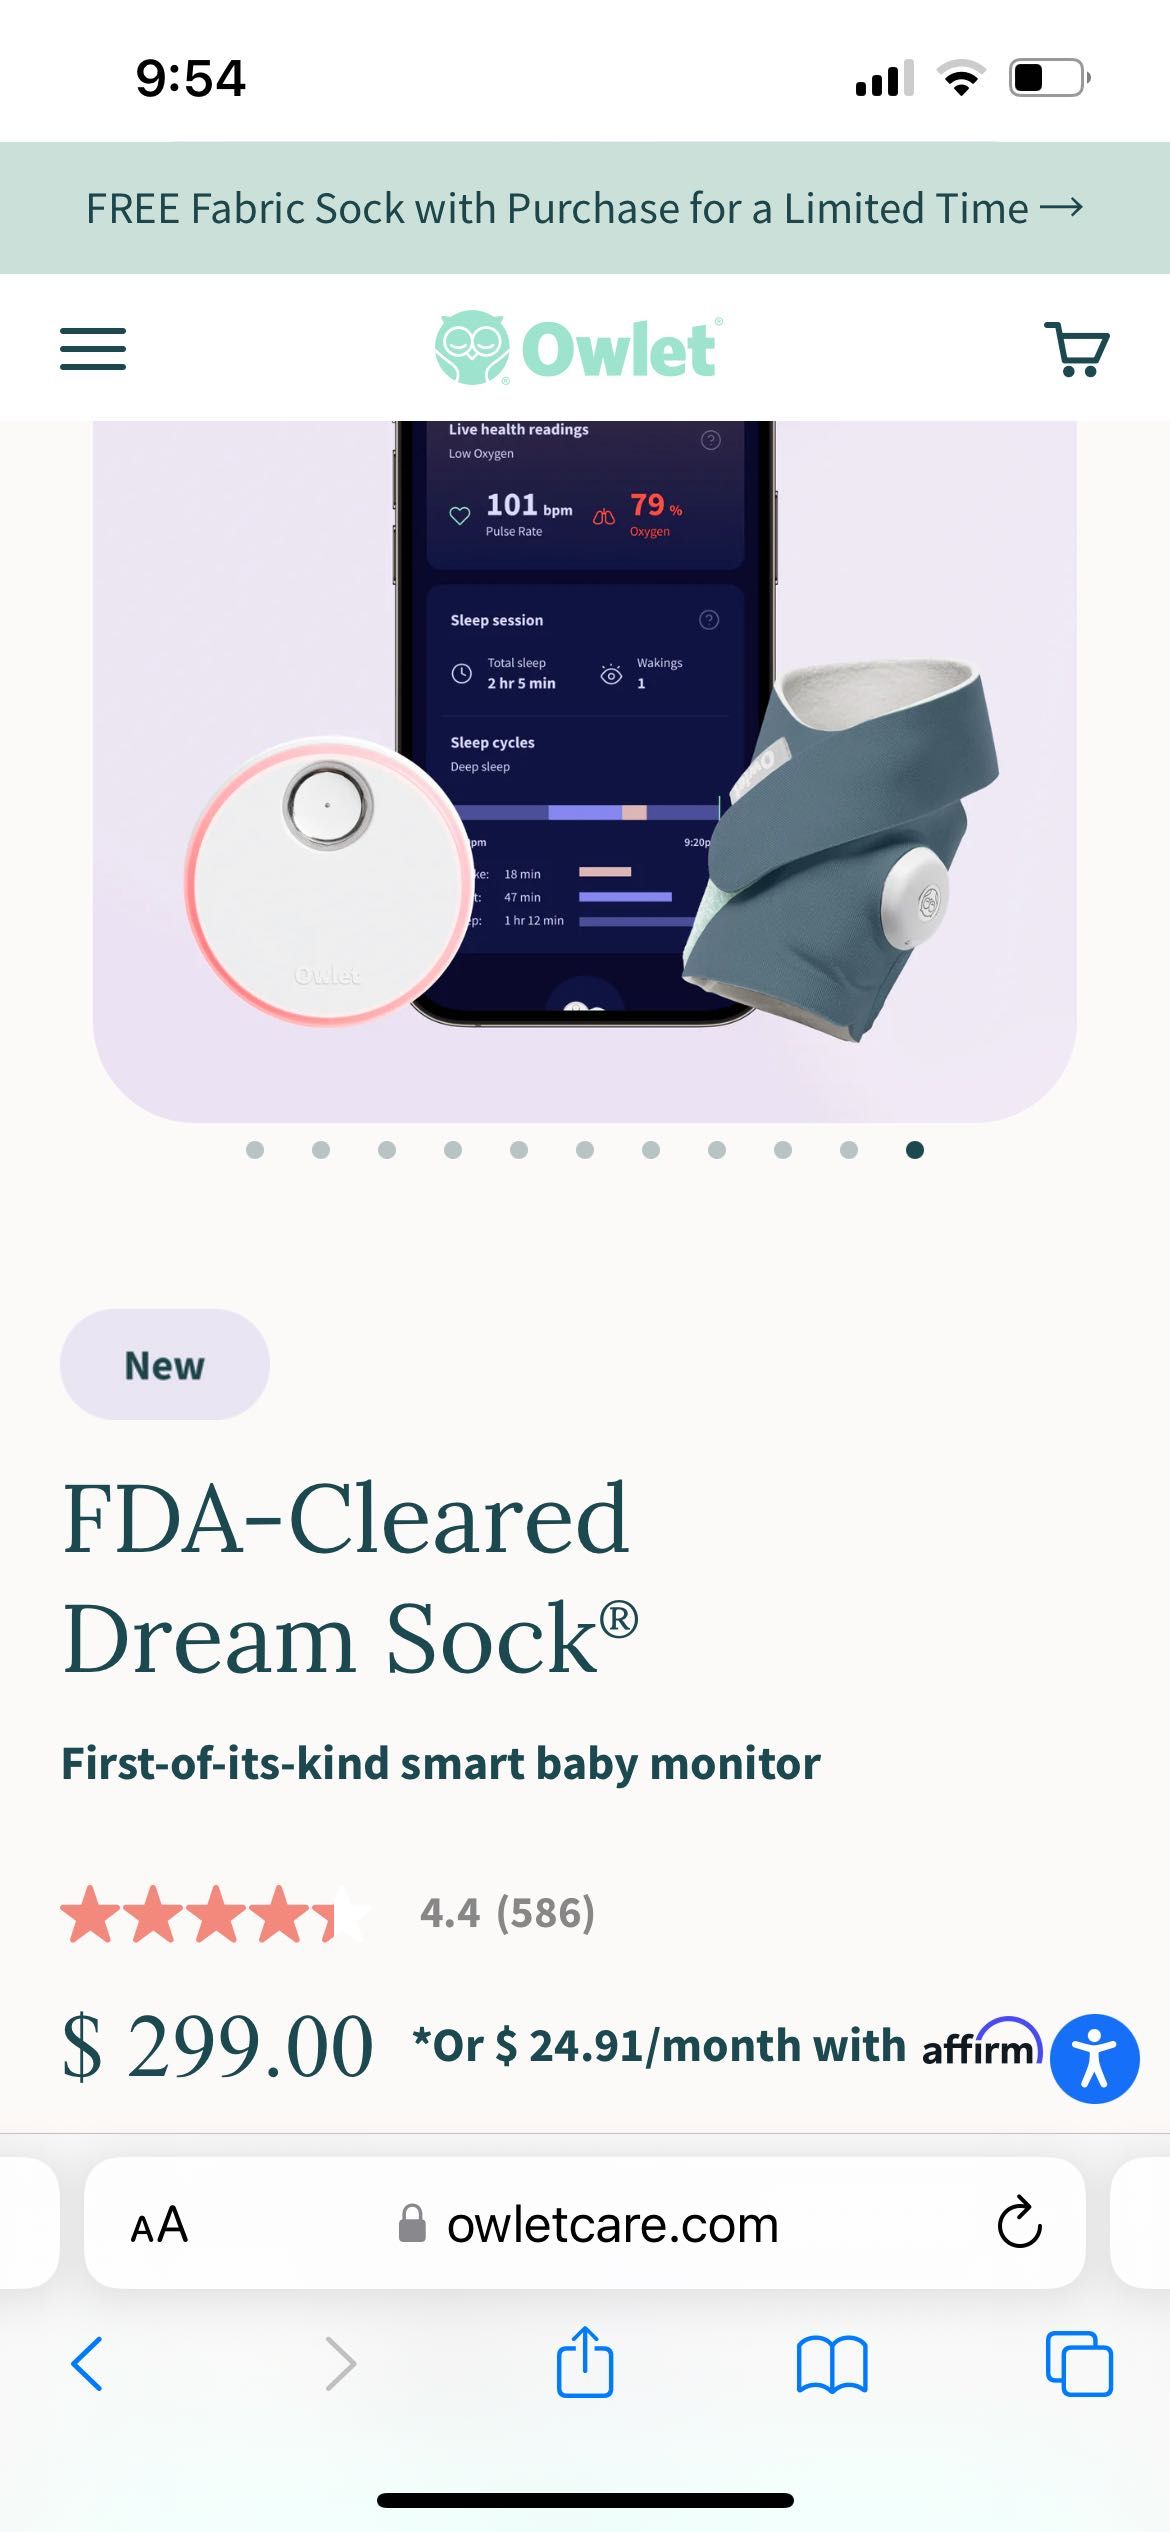 Owlet Smart Sock